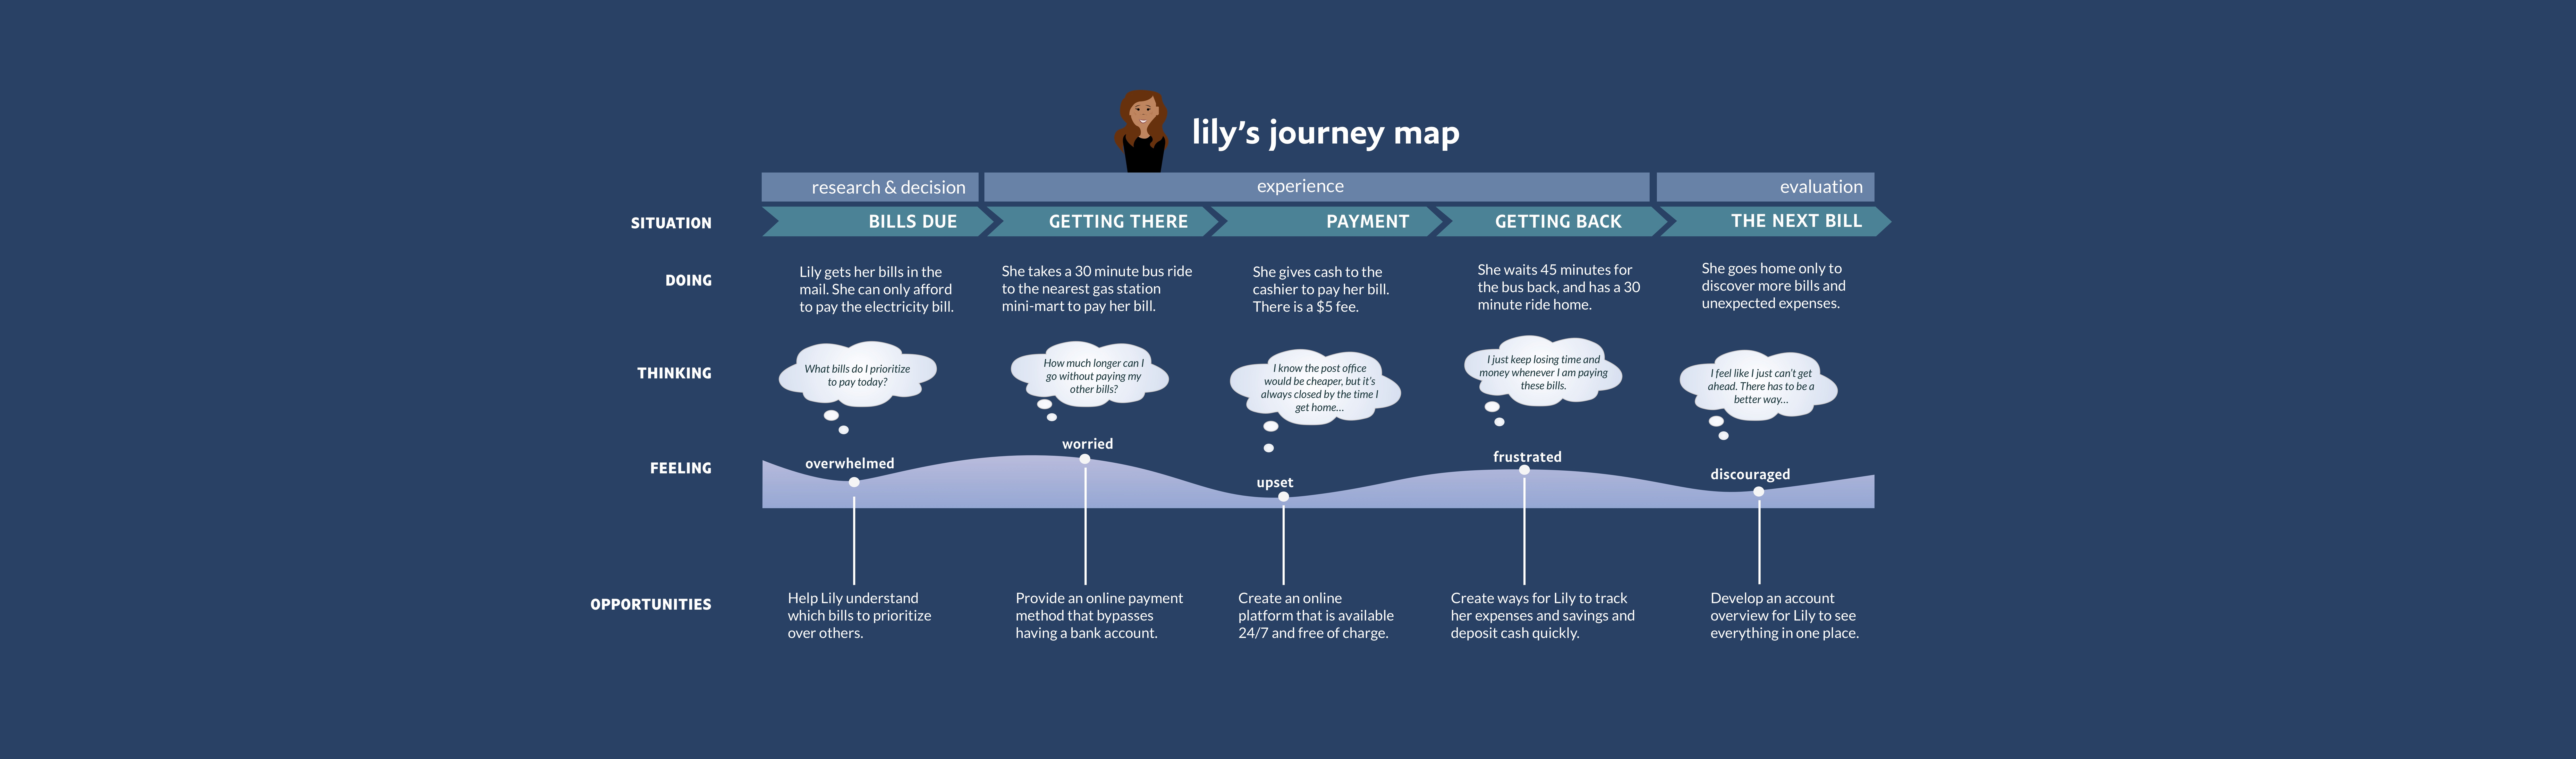 CFS-Journey-Map-3x